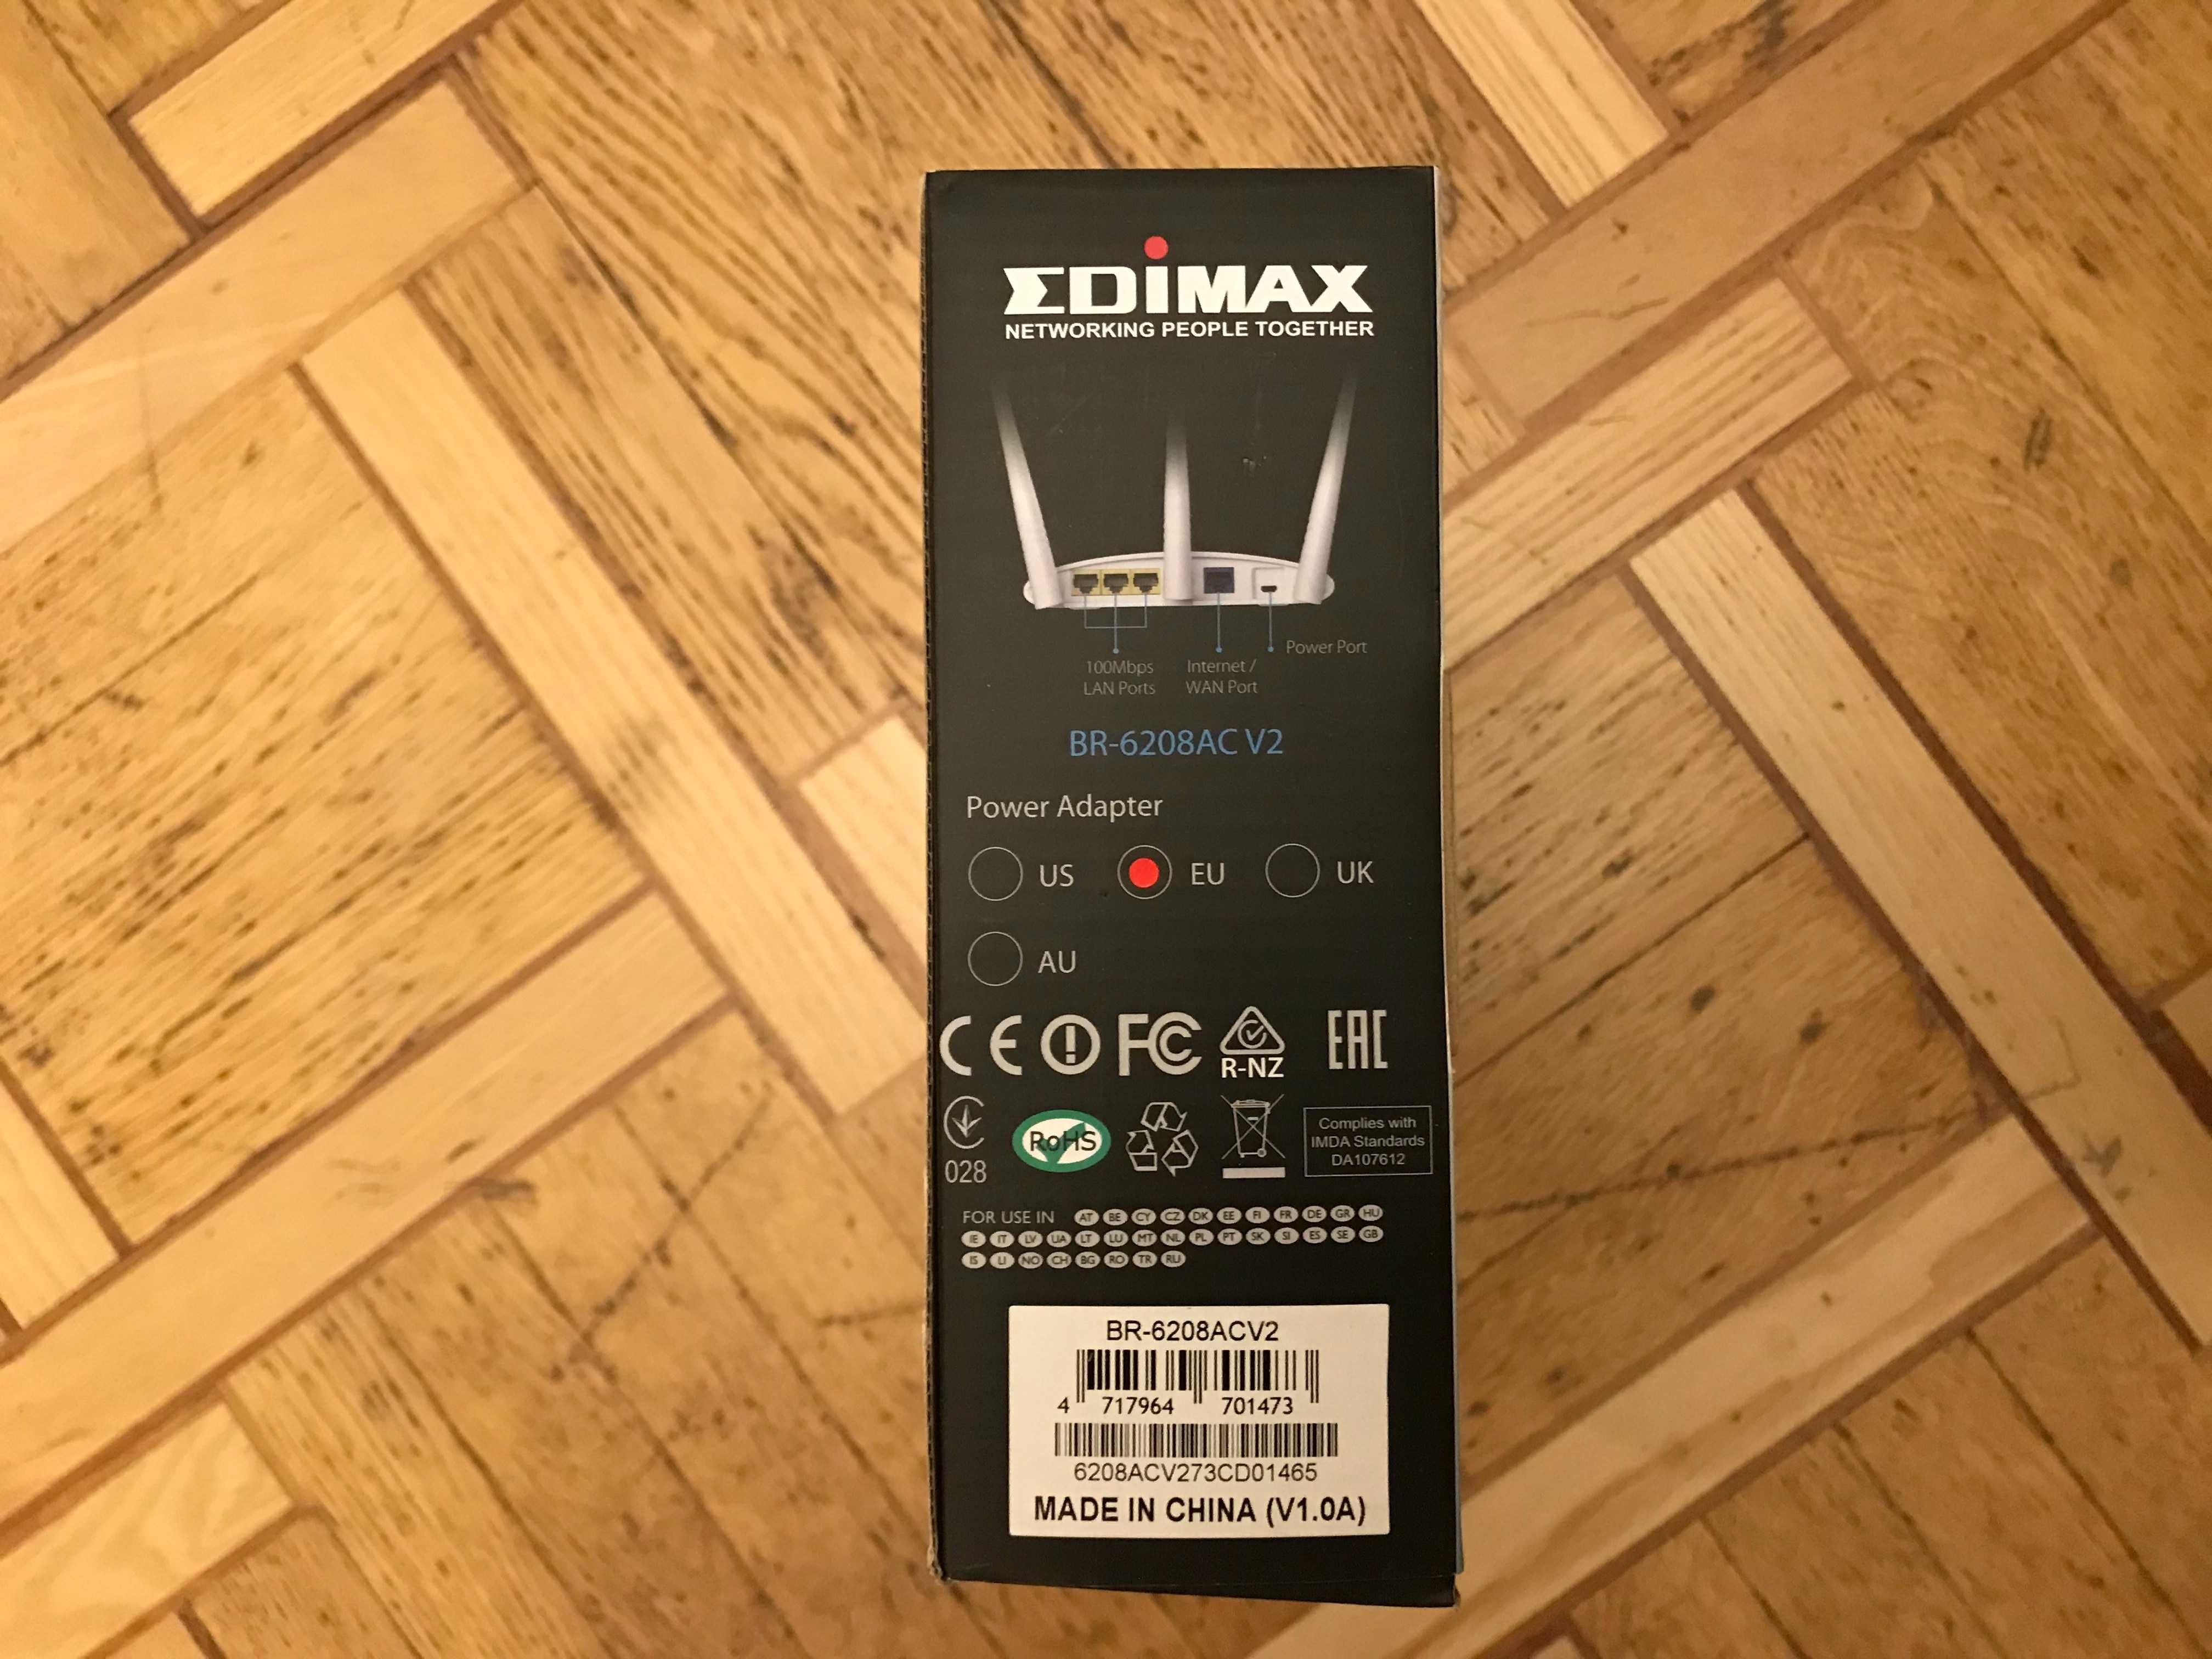 Edimax BR-6208AC V2